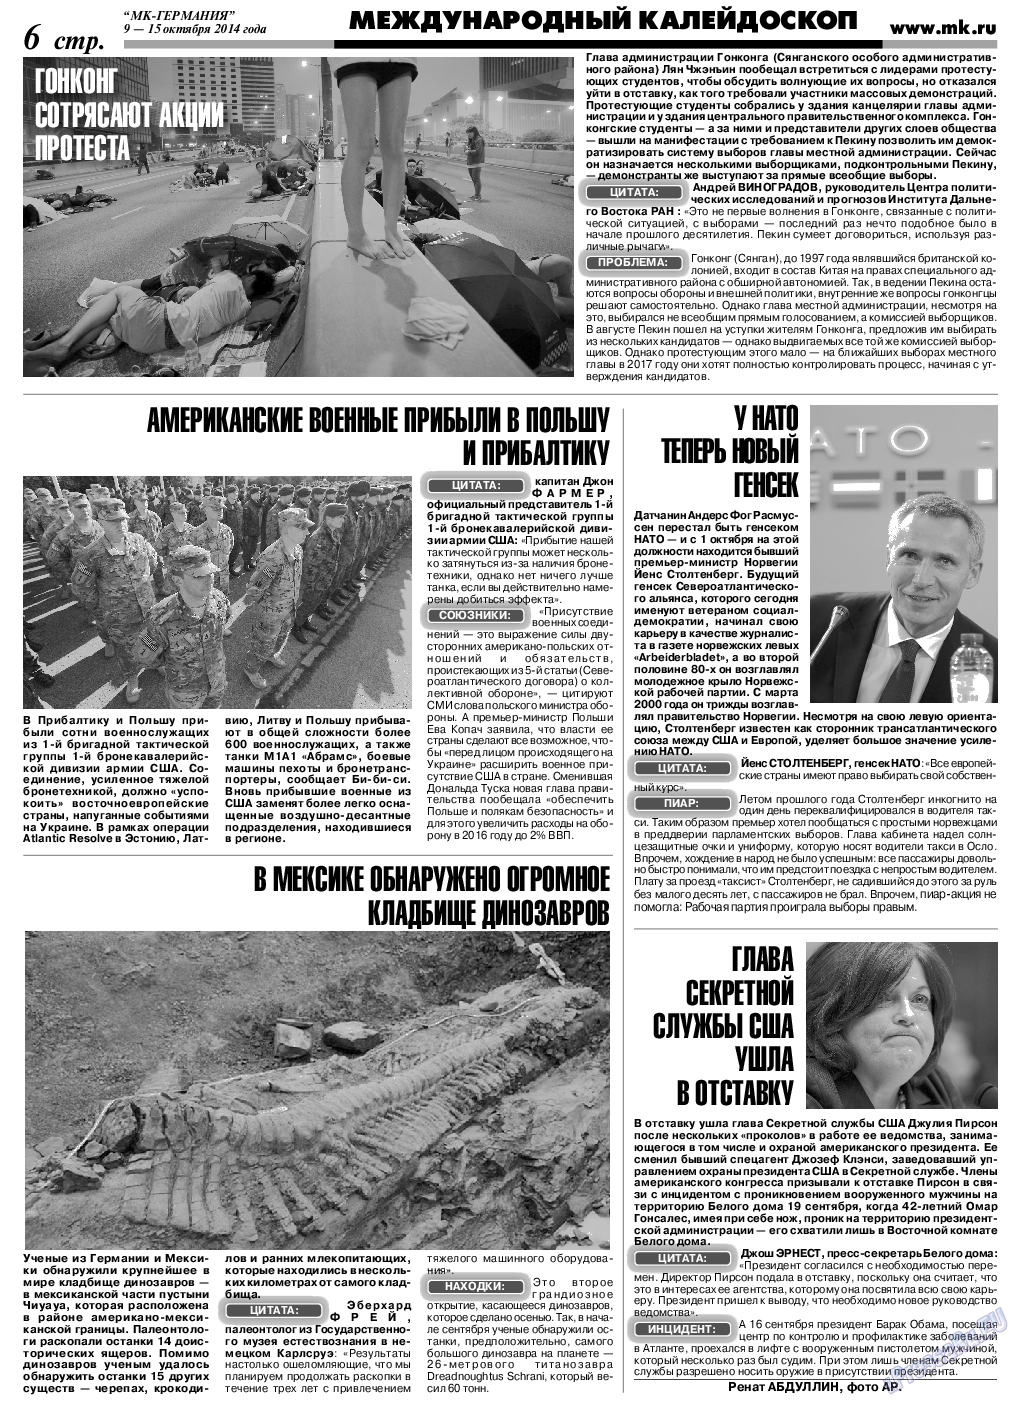 МК-Германия, газета. 2014 №41 стр.6